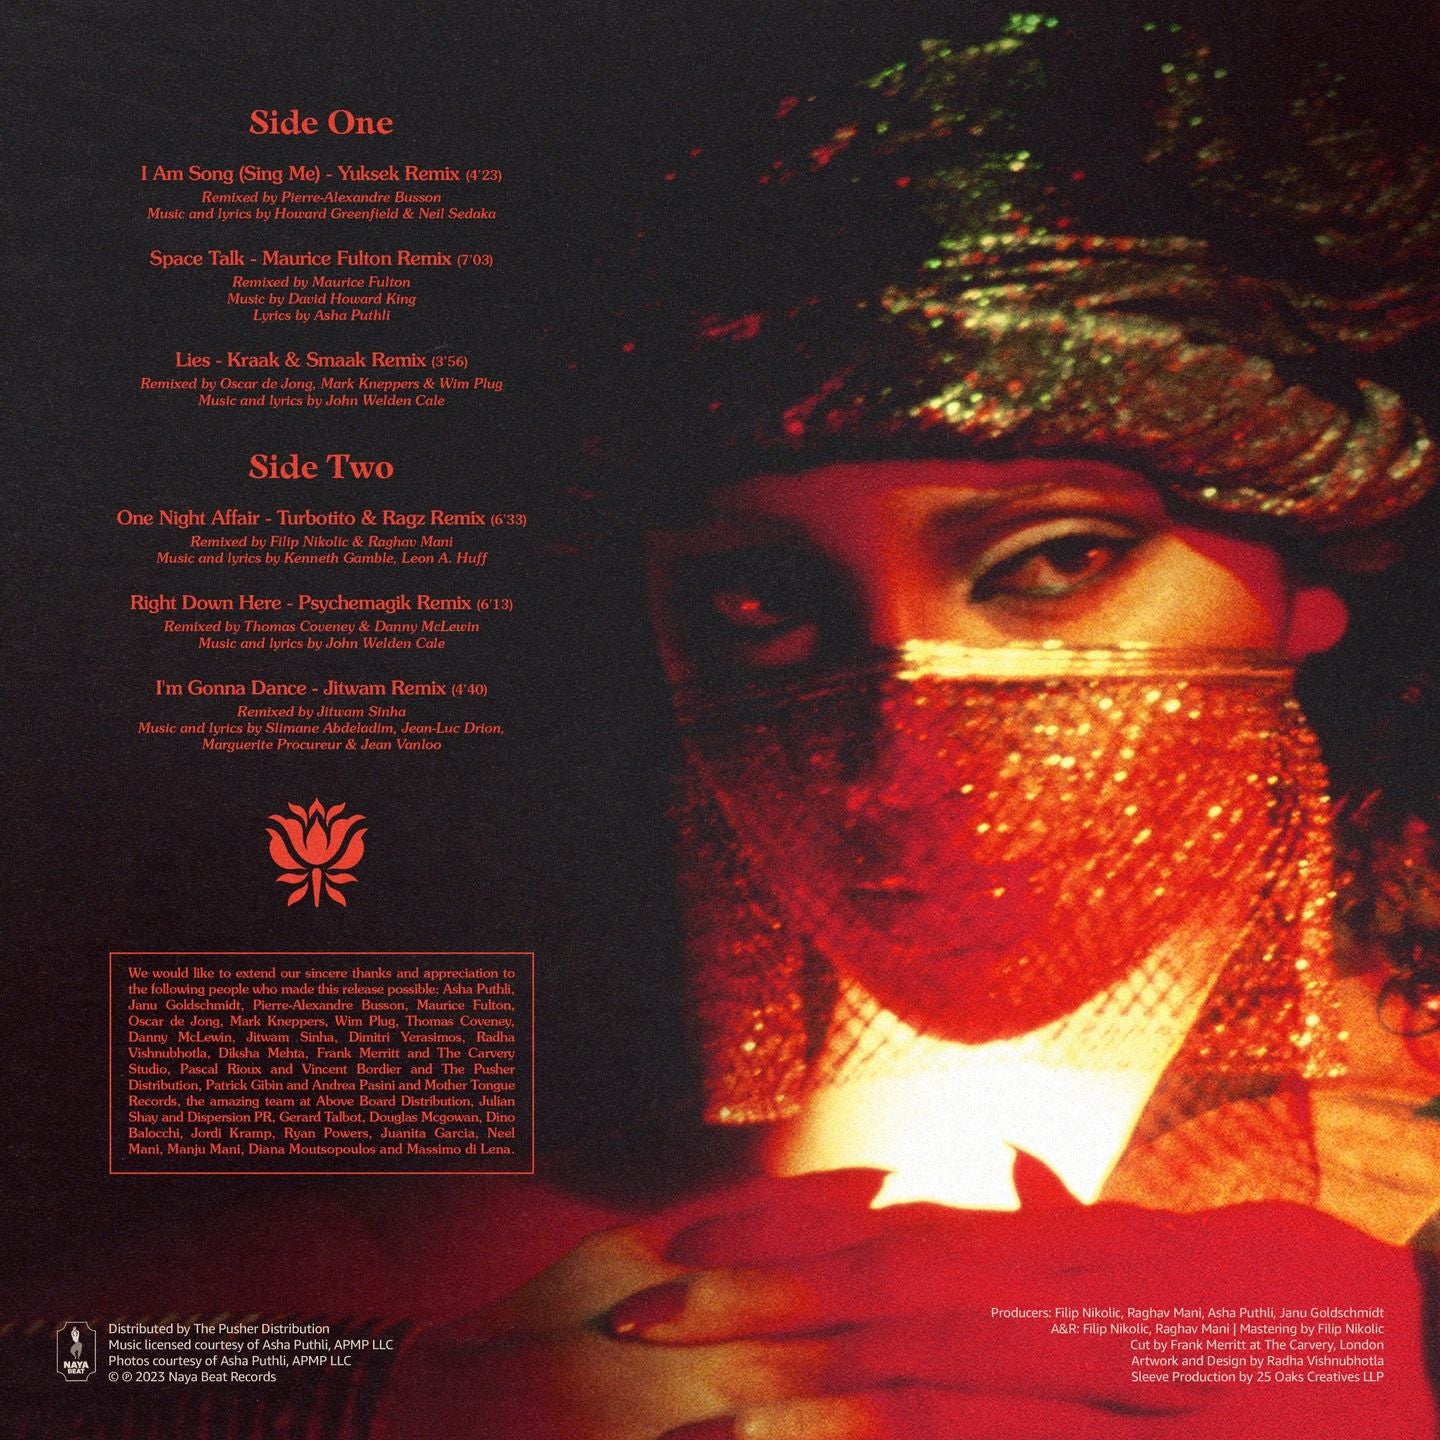 Asha Puthli – Disco Mystic (Select Remixes Volume 1)